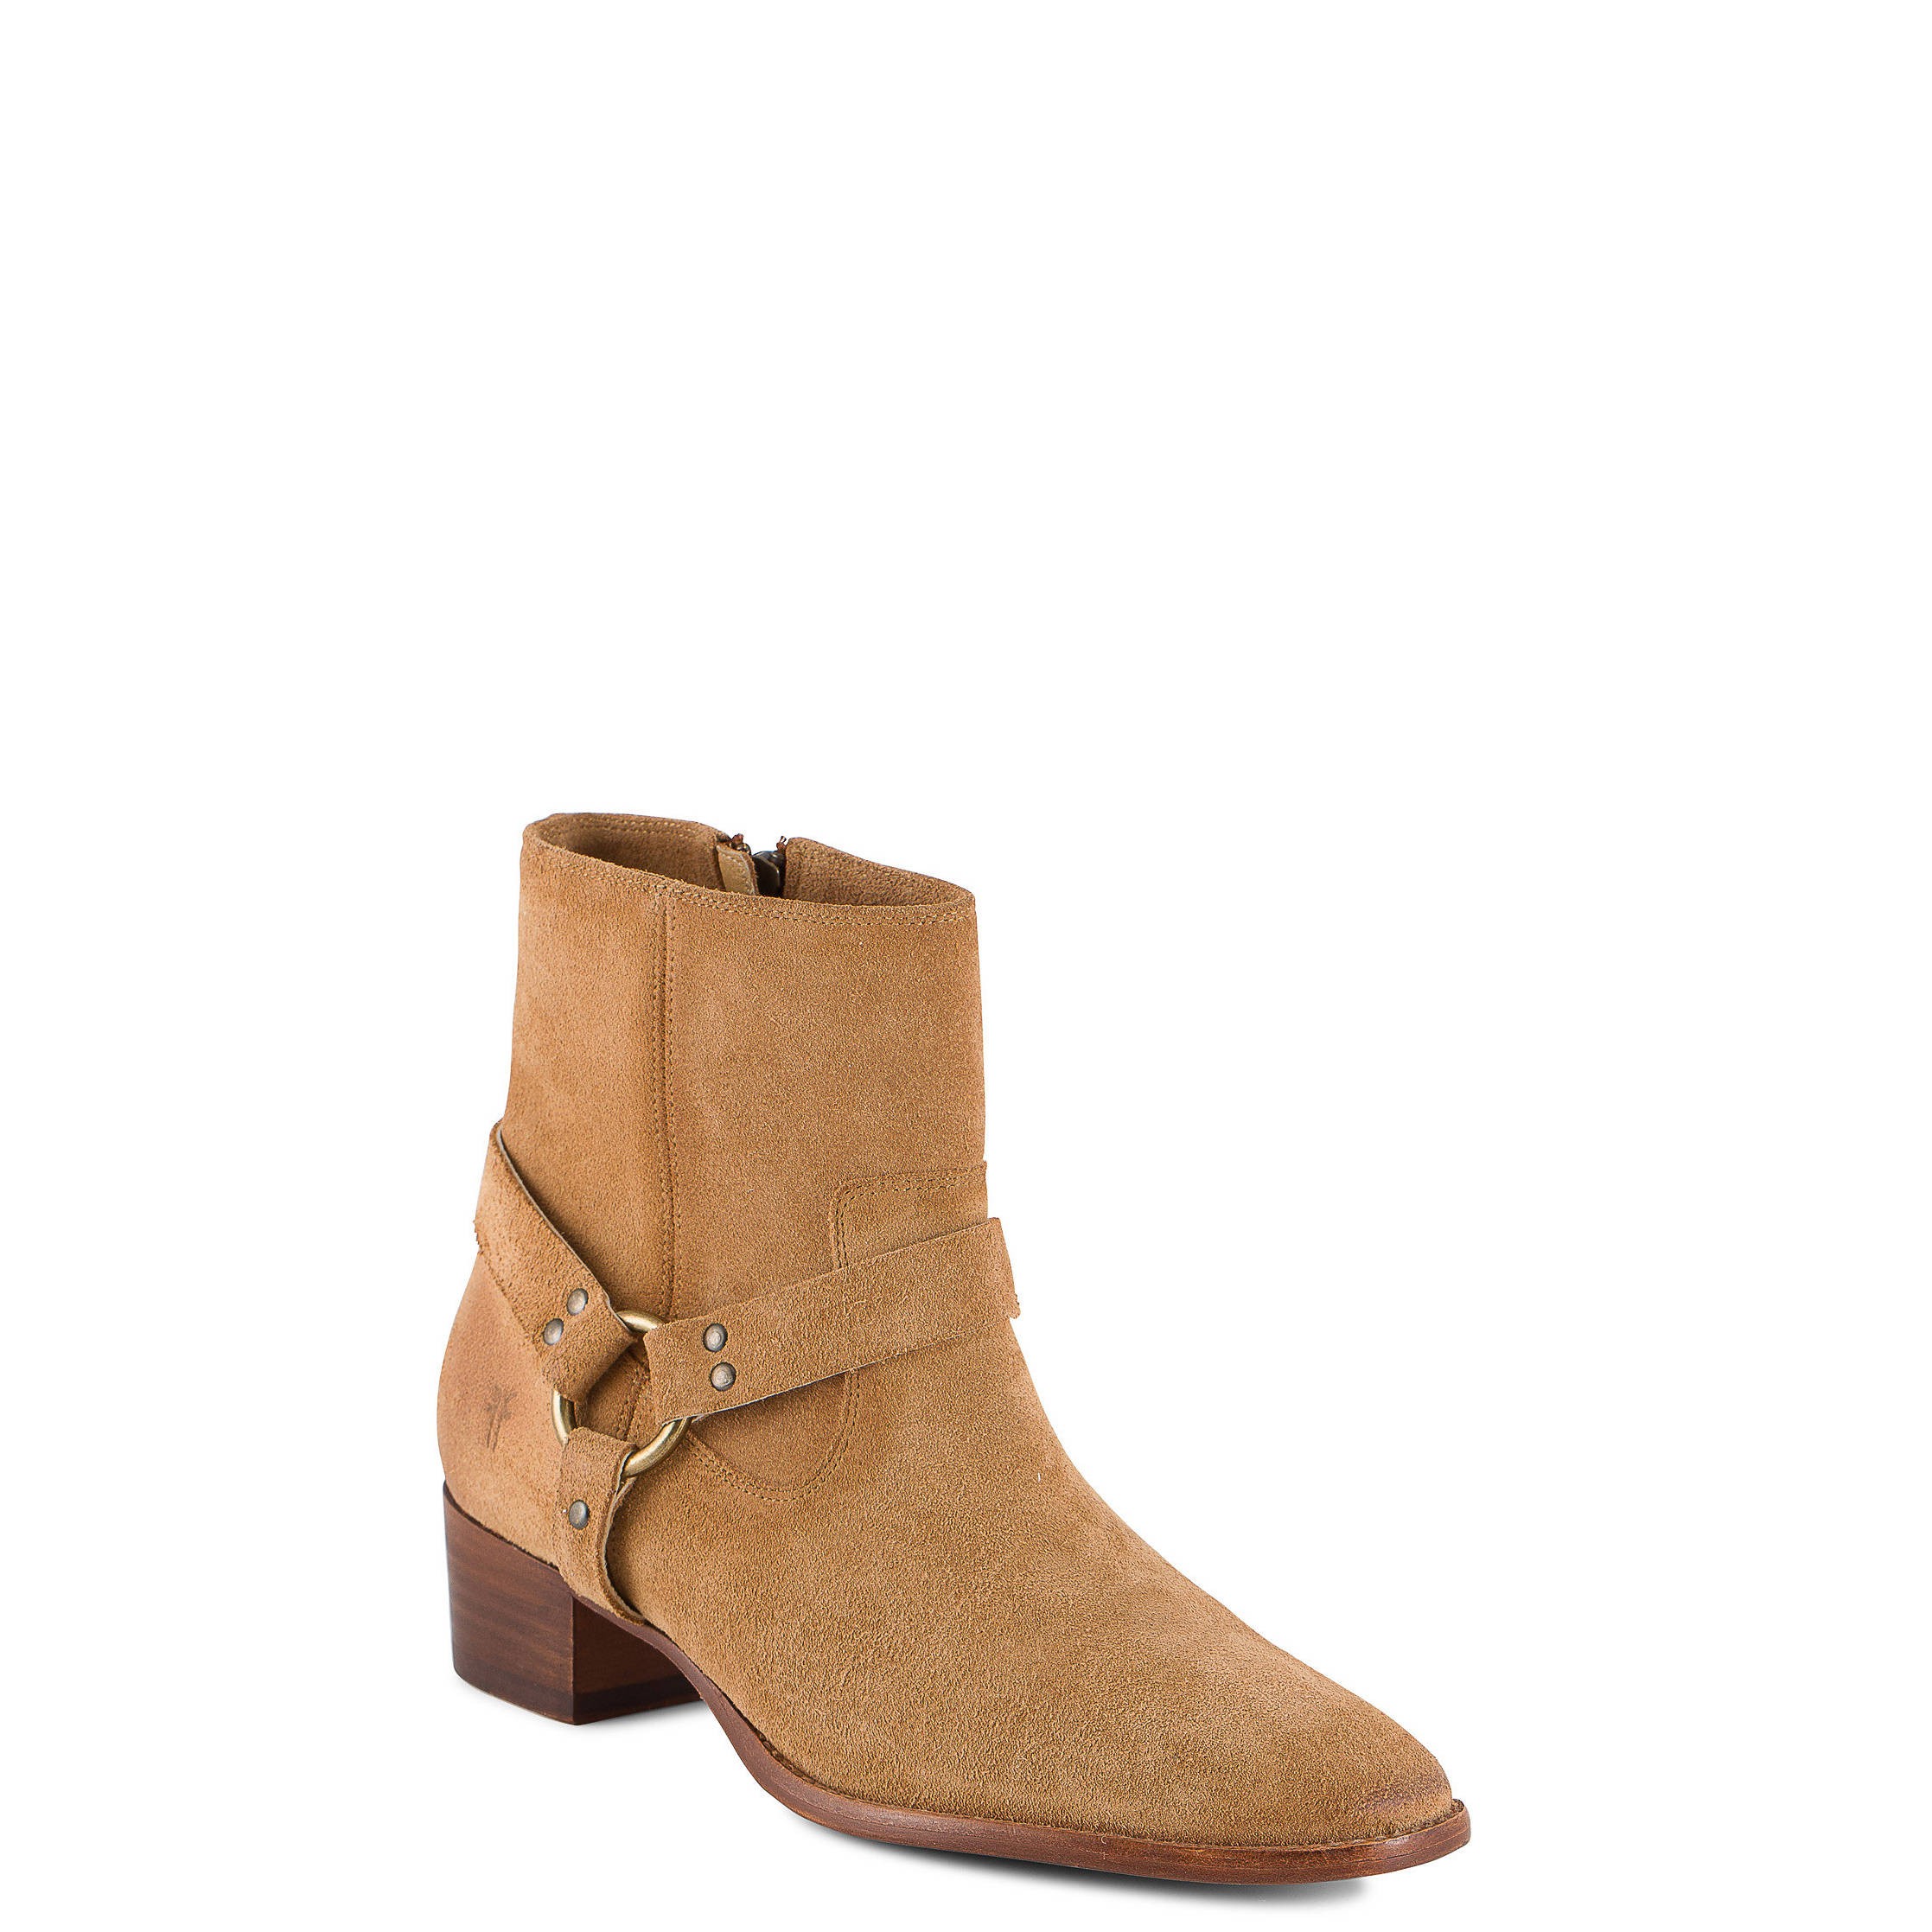 Allens Boots | Women's Frye Boots Dara Harness Sand #73913-SND